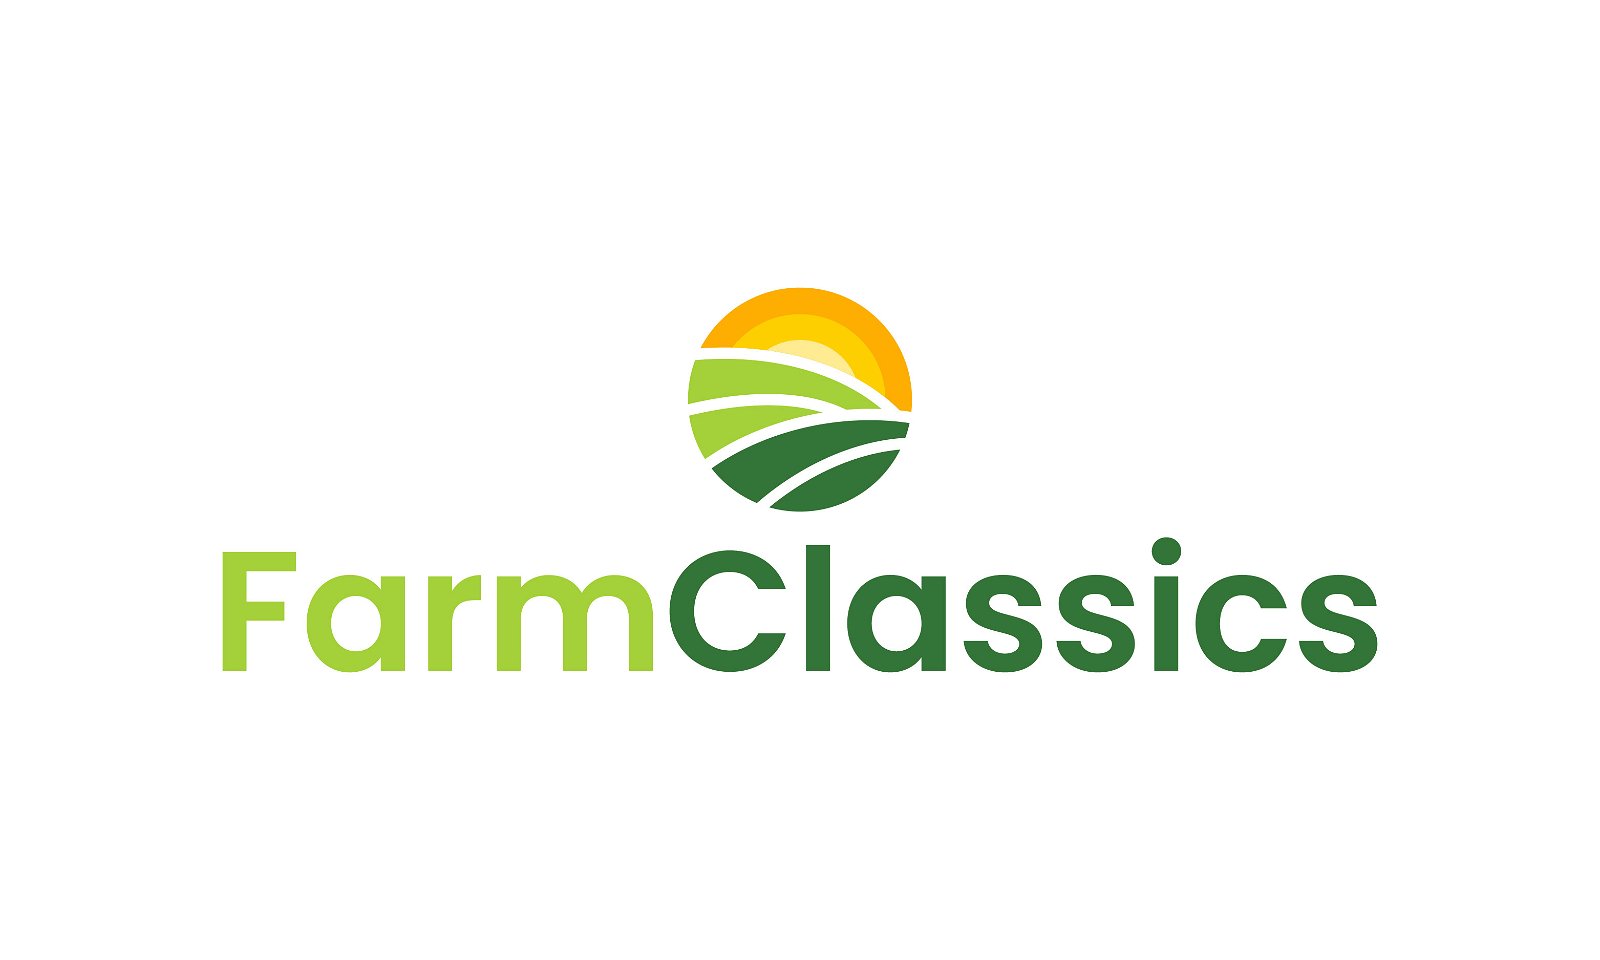 FarmClassics.com - Creative brandable domain for sale